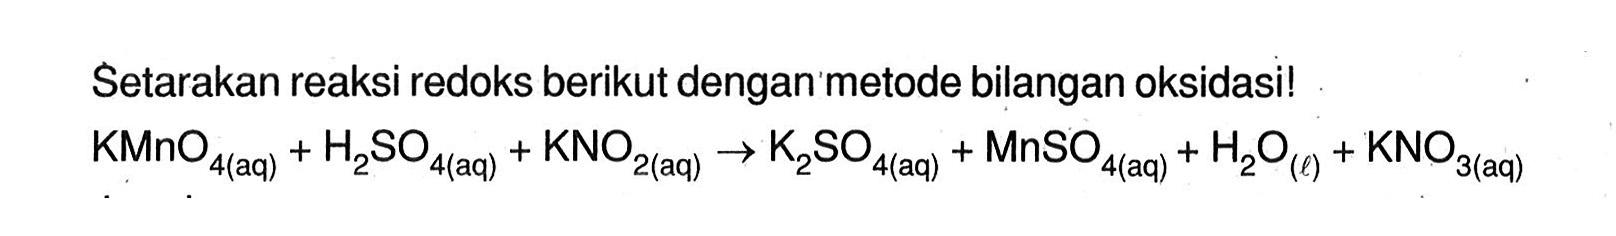 Setarakan reaksi redoks berikut dengan'metode bilangan oksidasi! KMnO4 (aq) + H2SO4 (aq) + KNO2 (aq) -> K2SO4 (aq) + MnSO4 (aq) + H2O (l) + KNO3 (aq)